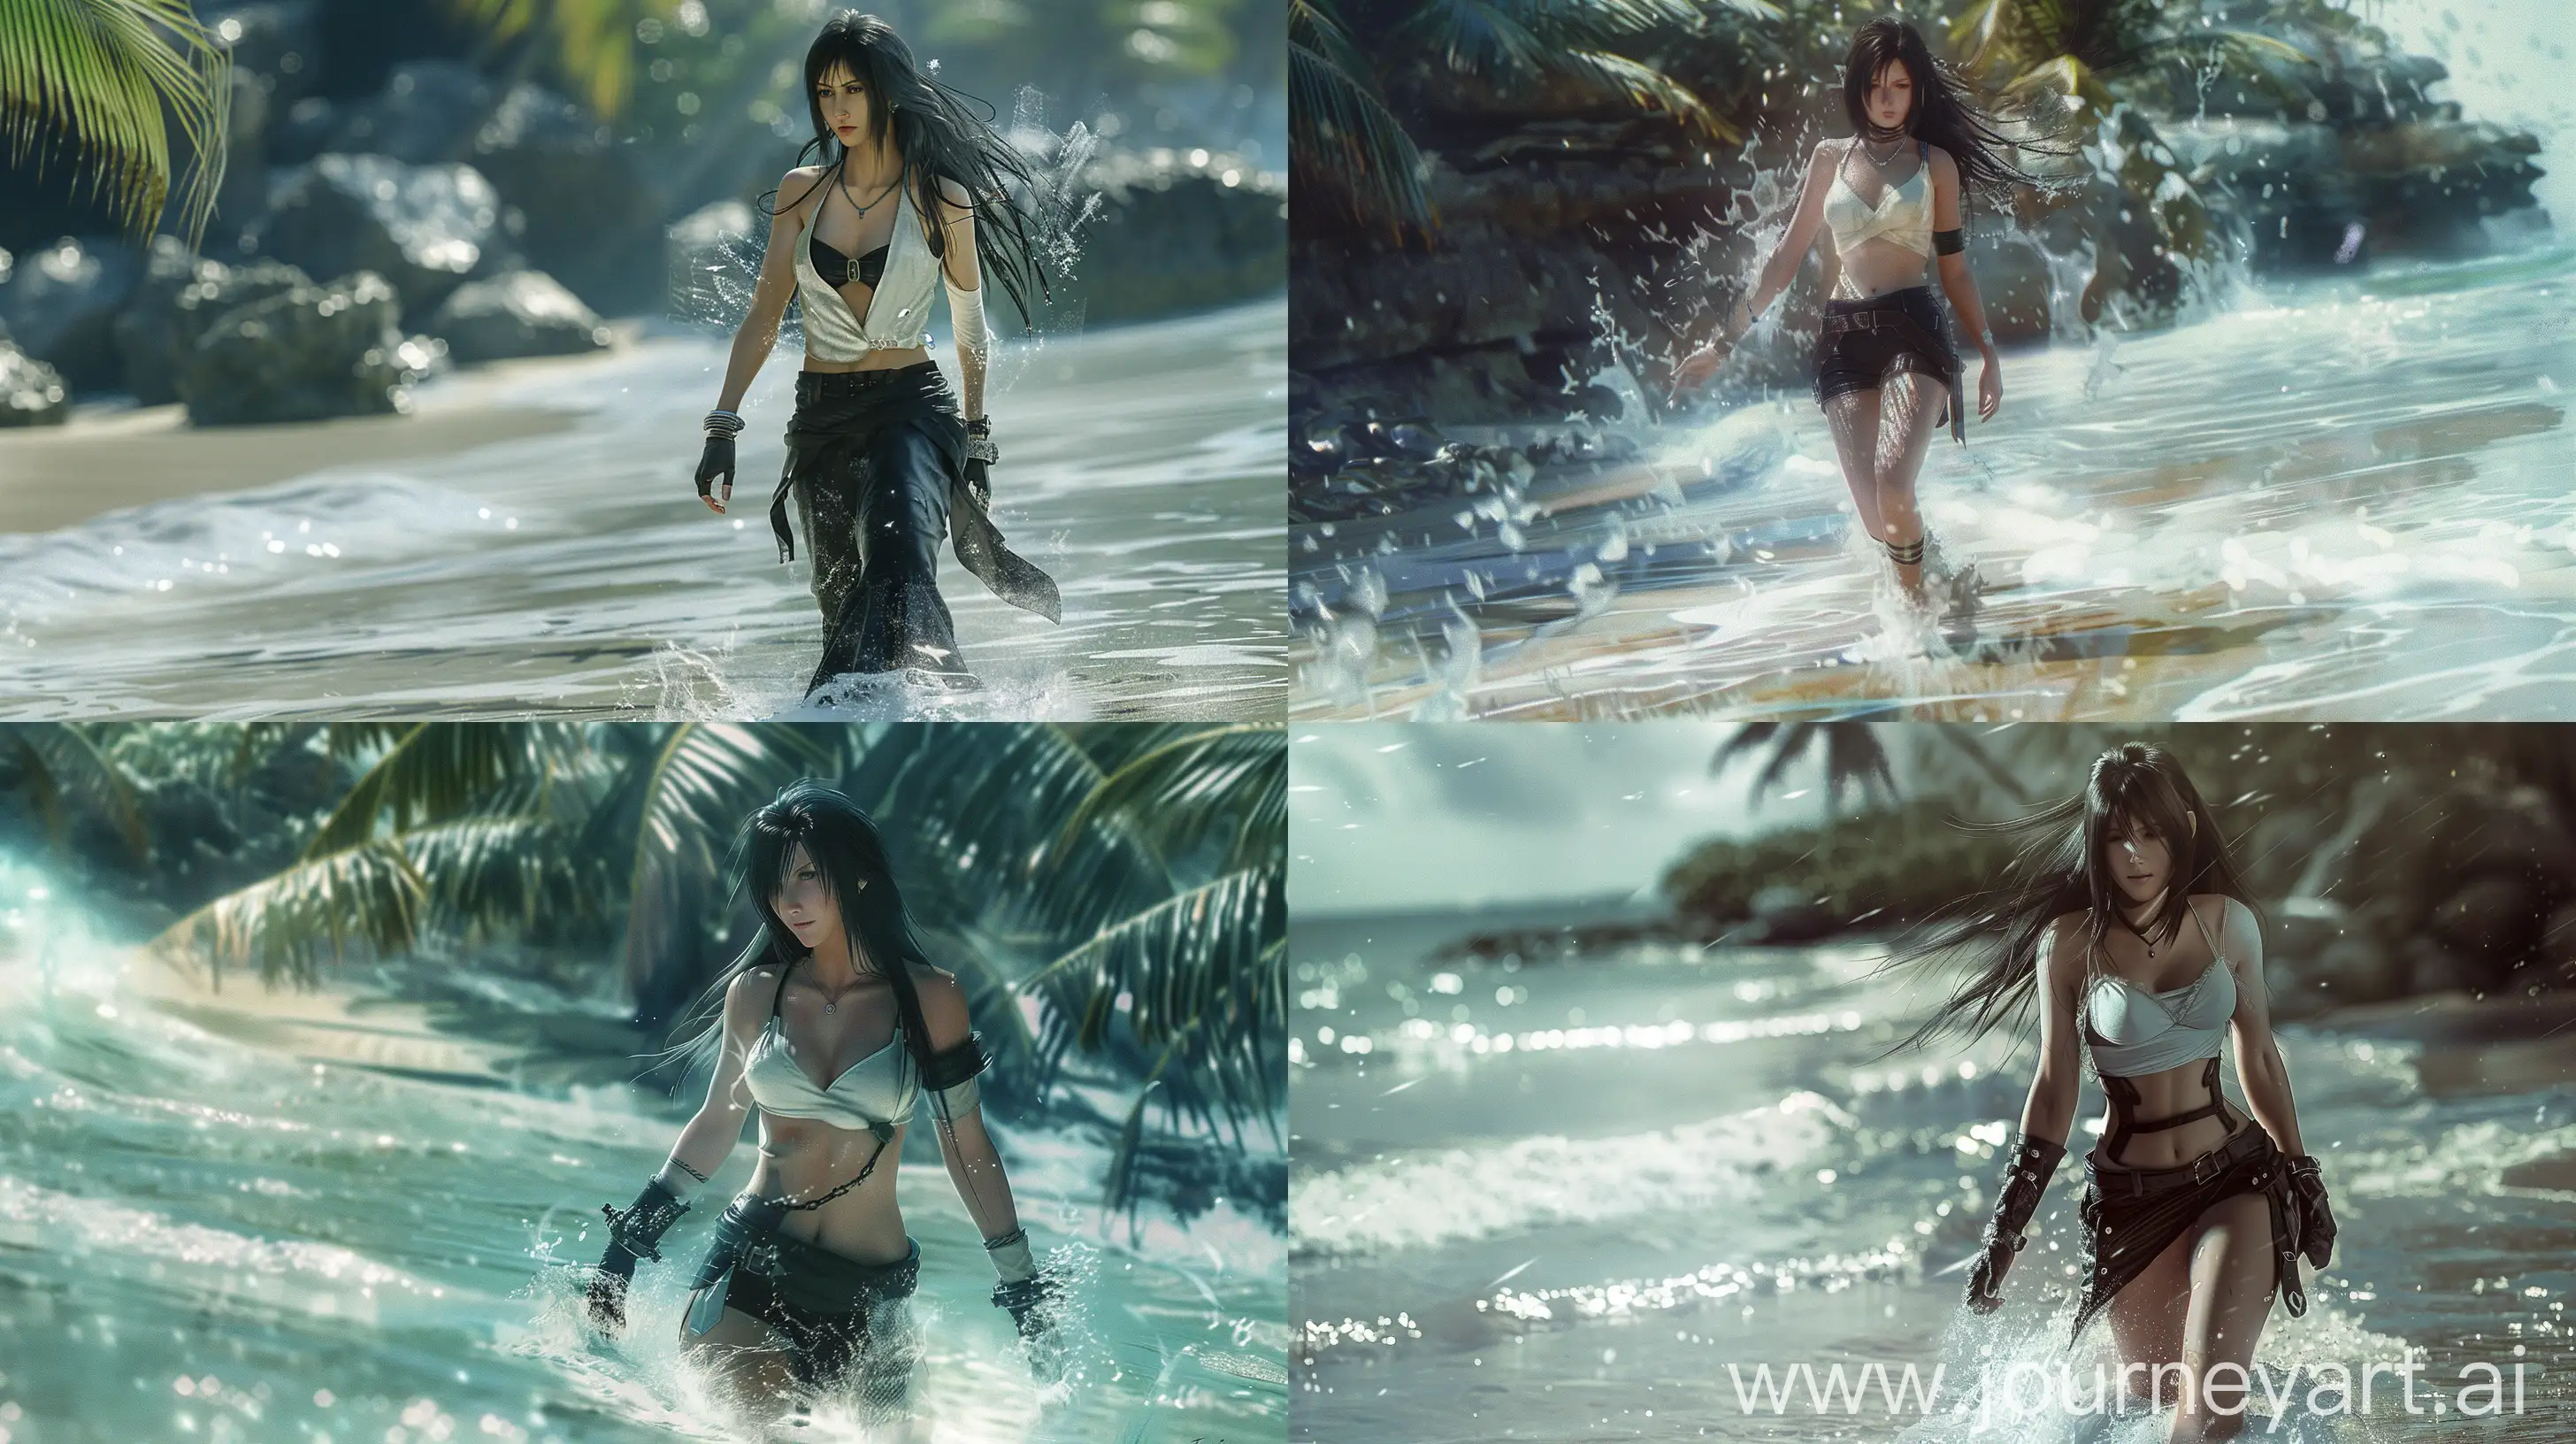 Tifa-from-Final-Fantasy-Walking-Along-Tropical-Island-Shoreline